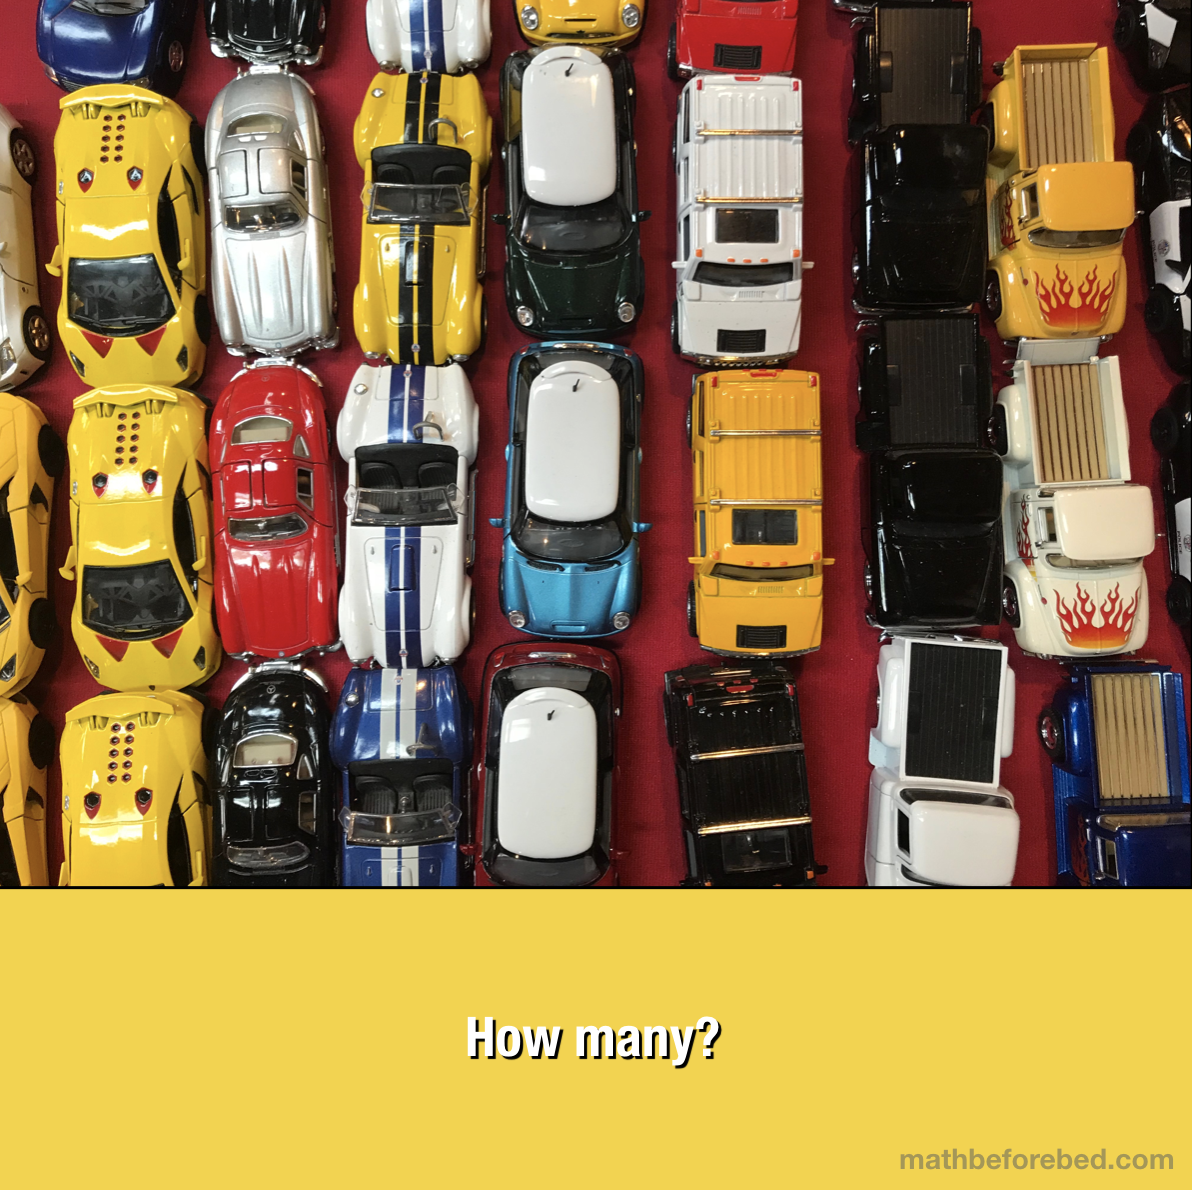 Car Collection